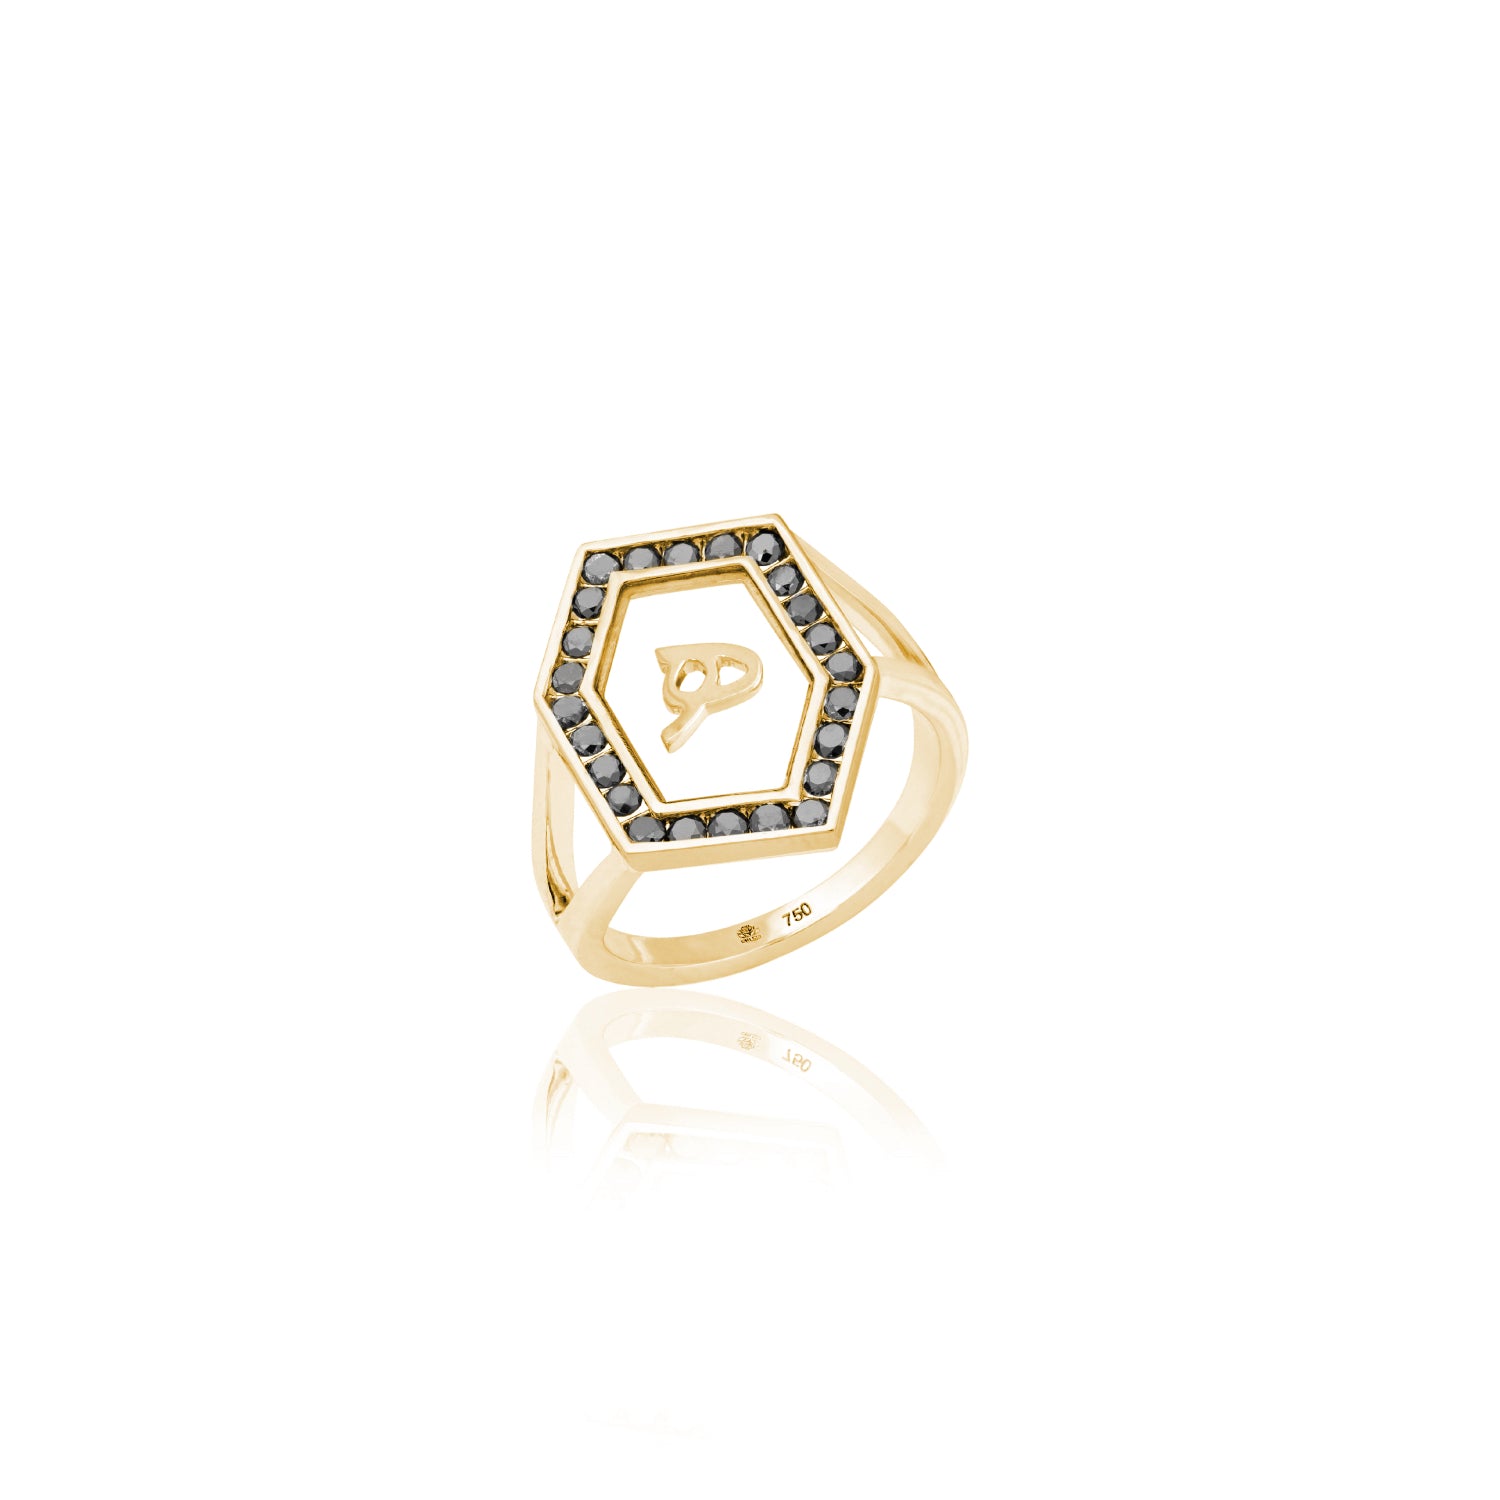 Qamoos 1.0 Letter هـ Black Diamond Ring in Yellow Gold